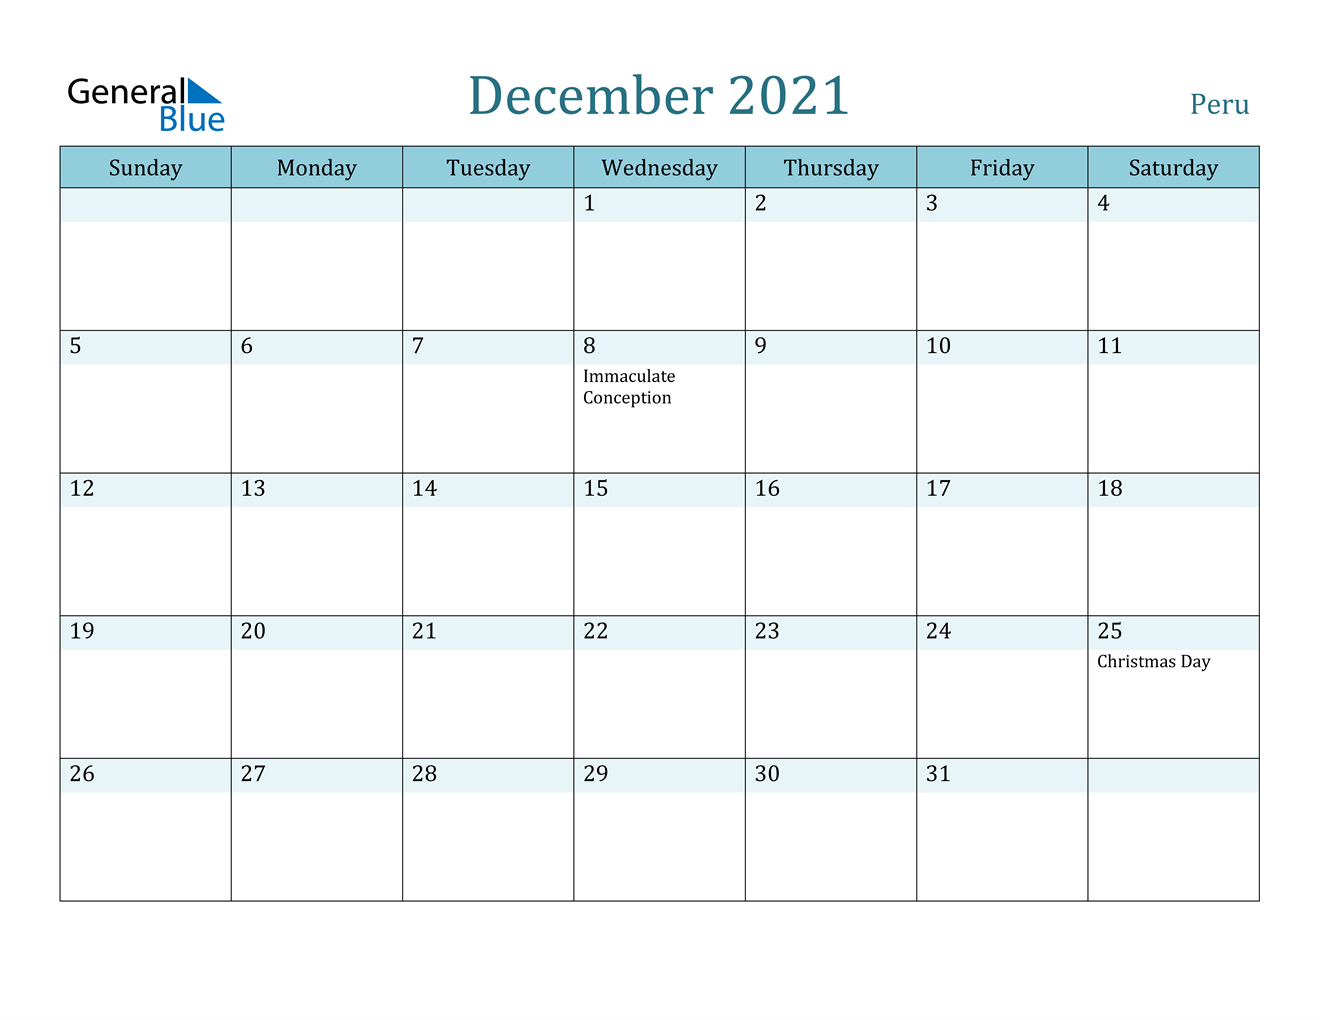 December 2021 Calendar - Peru